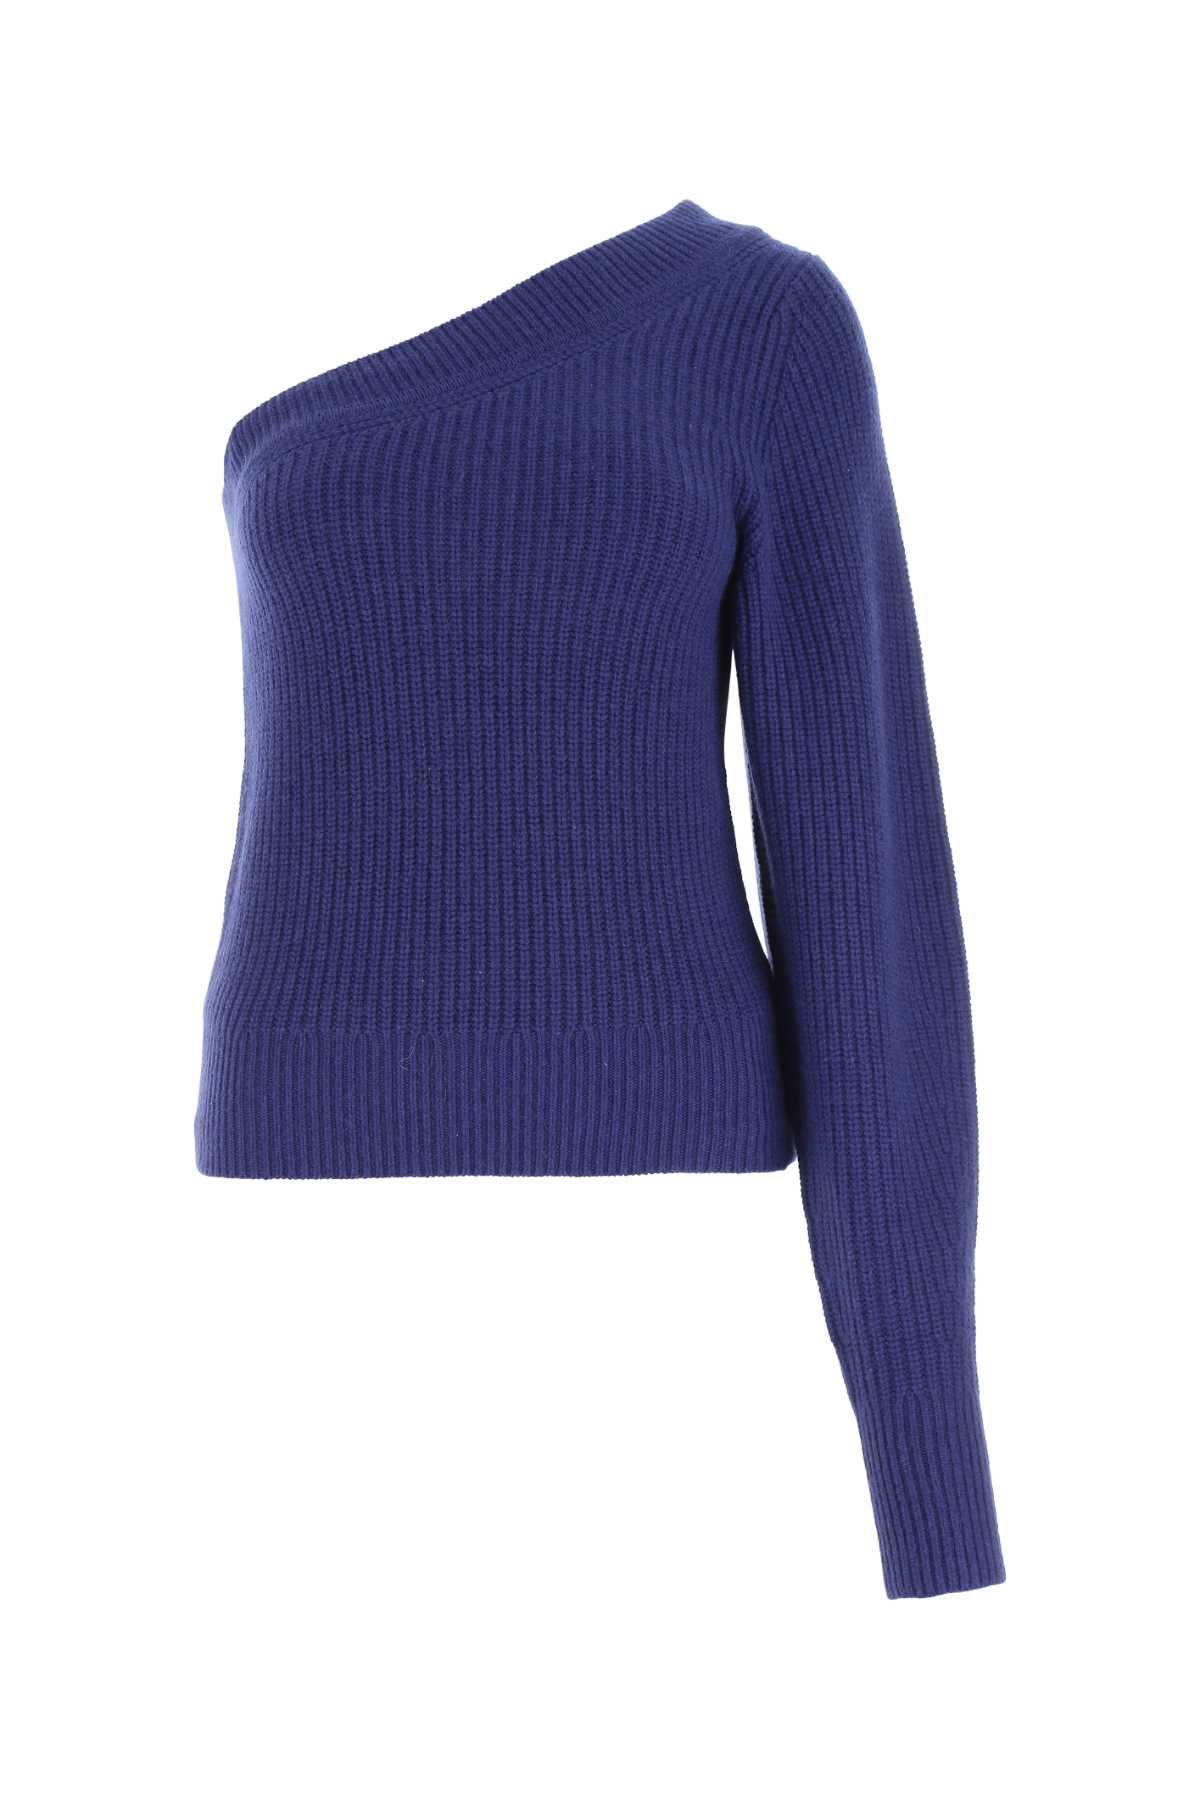 Blue Wool Blend Bowen Sweater